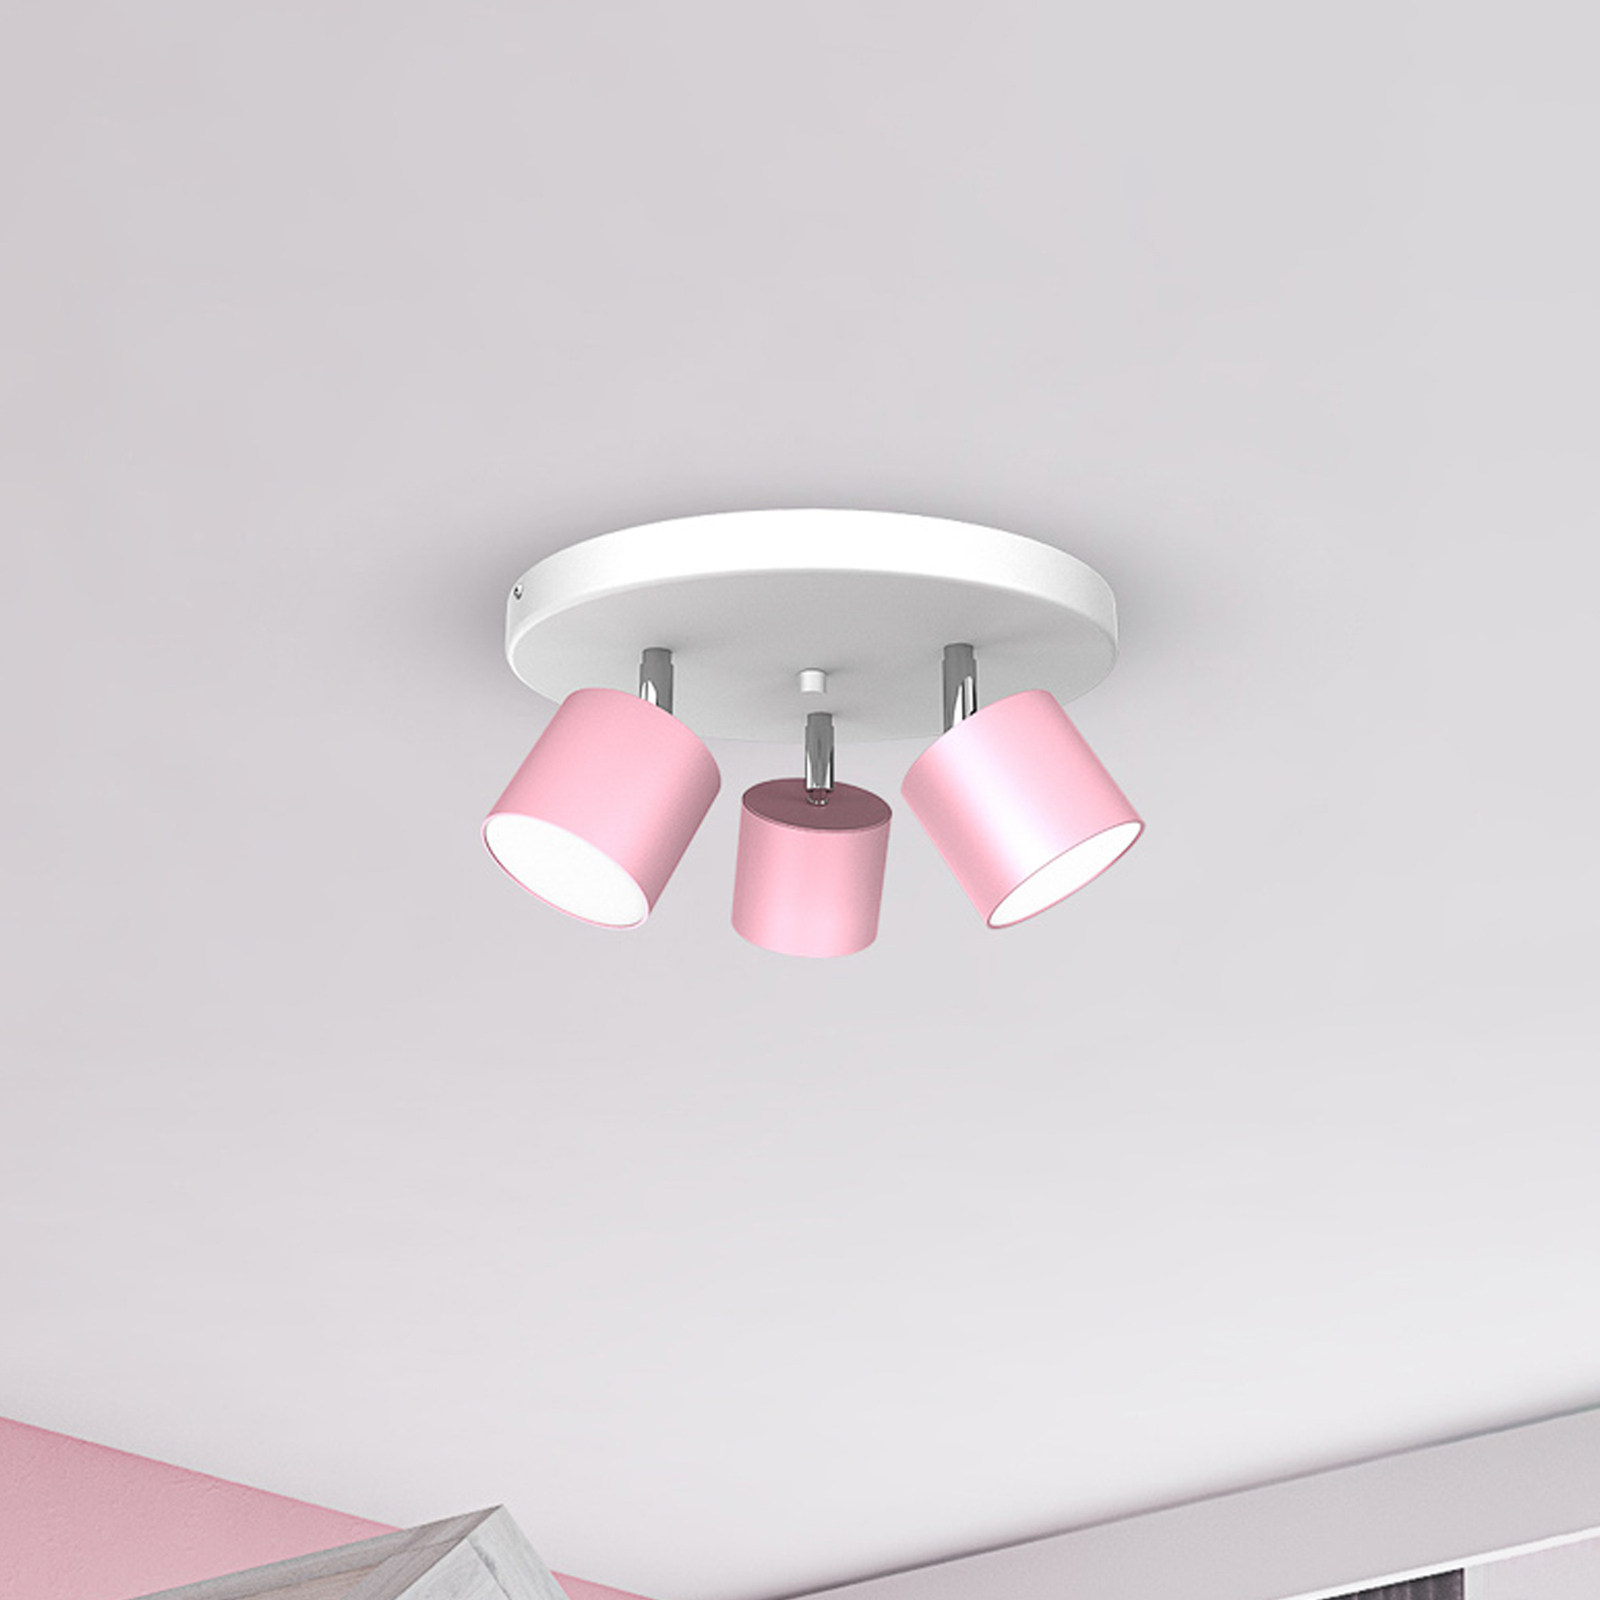 Takspotlight Cloudy 3 lampor rondell rosa